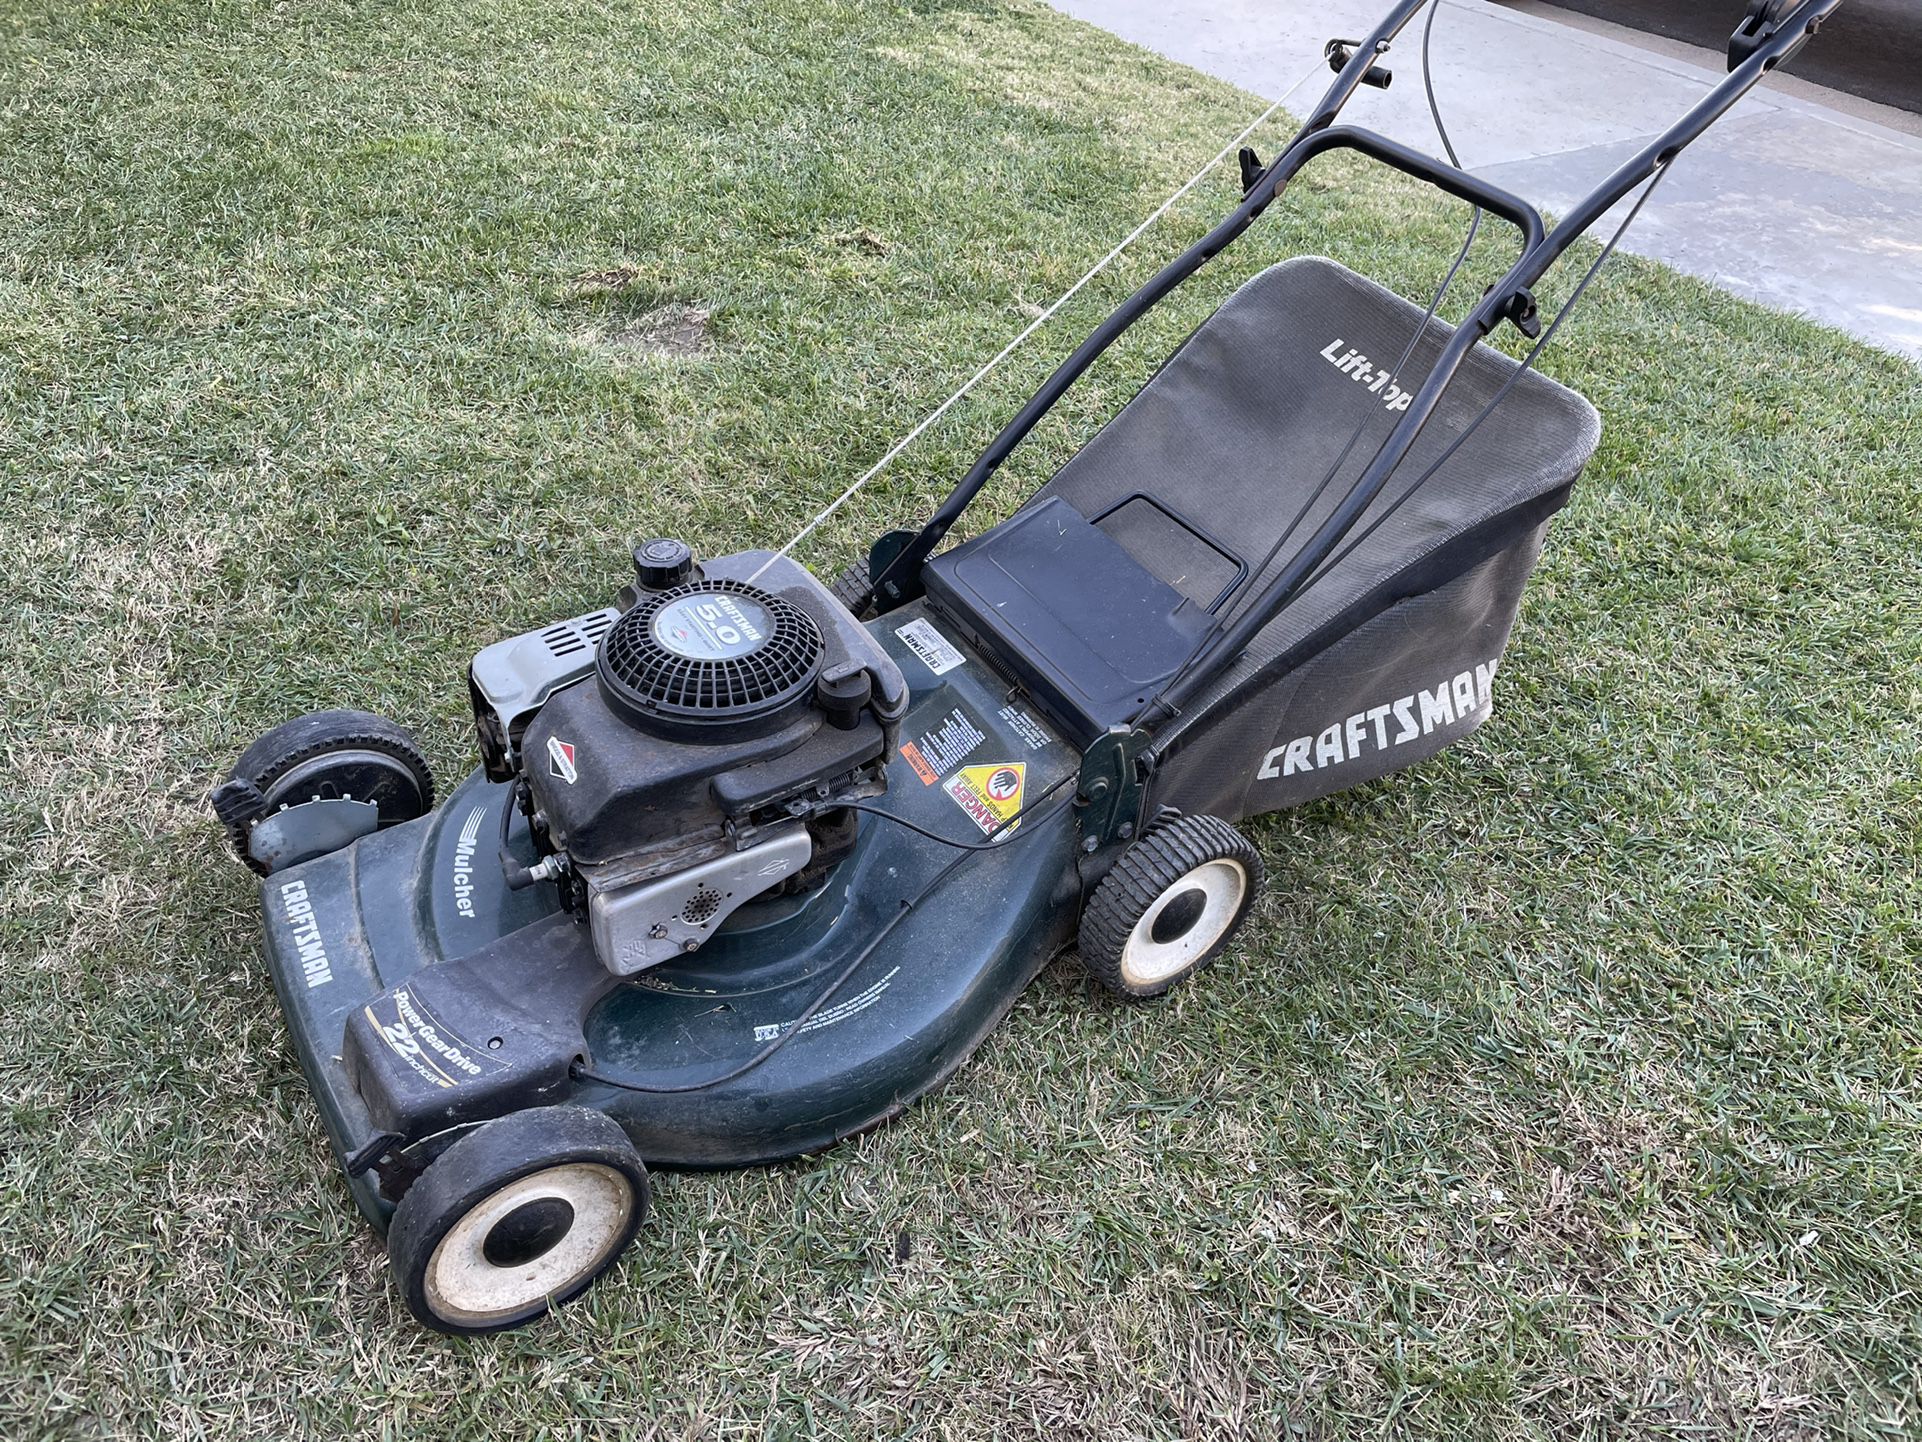 22’ Craftsman 5HP Self-Propelled Gas Push Lawn Mower